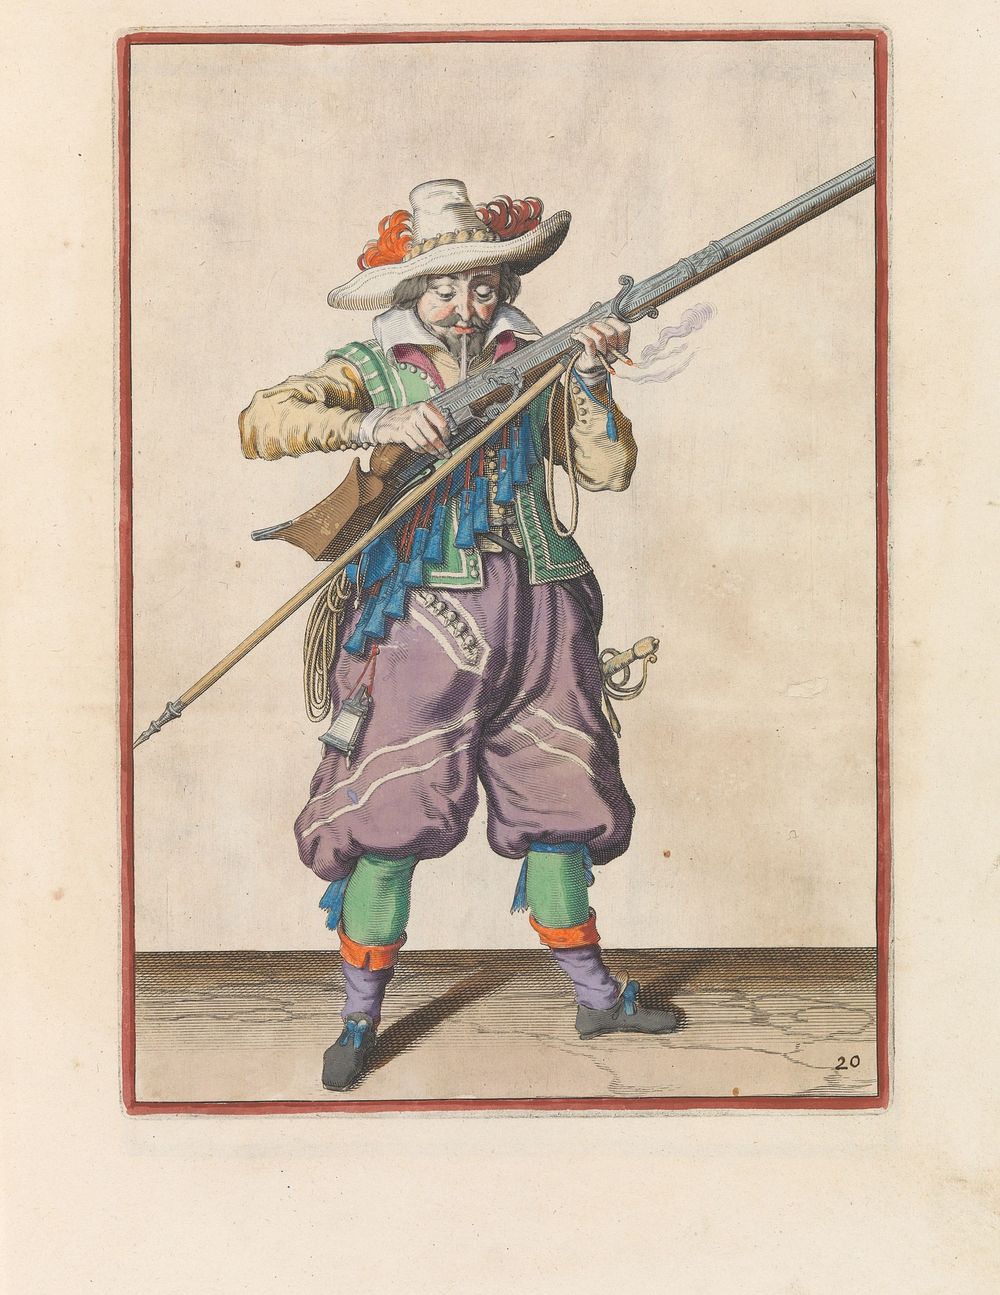 Soldaat die kruit van zijn musket blaast (c. 1597 - 1607) by Jacques de Gheyn II and Jacques de Gheyn II